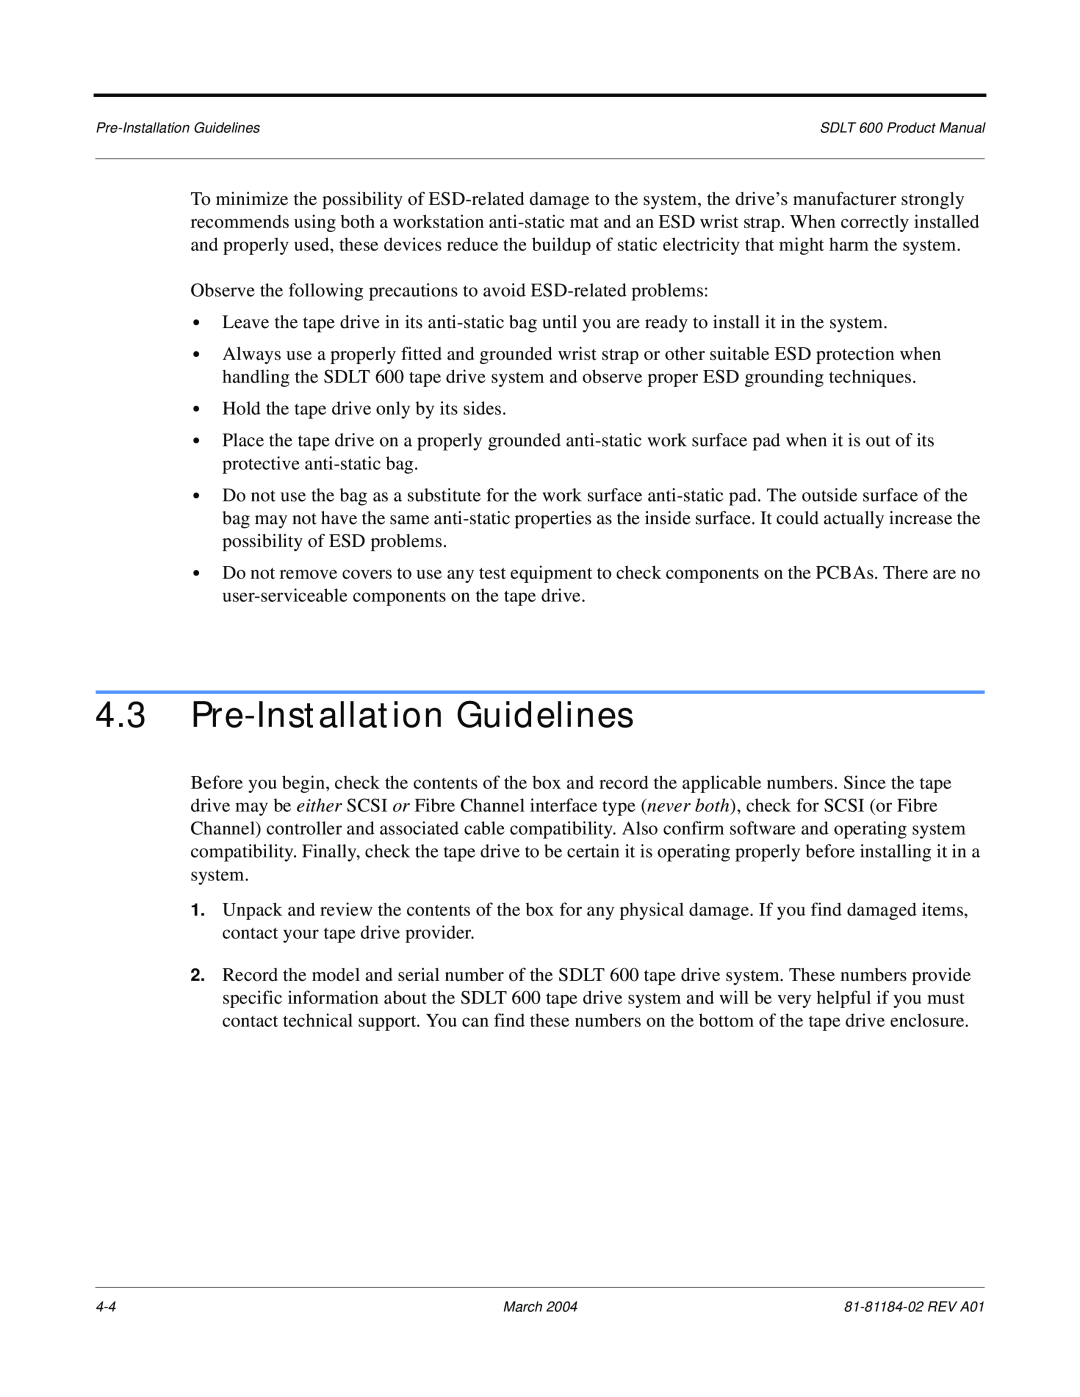 Tandberg Data 600 manual Pre-Installation Guidelines 